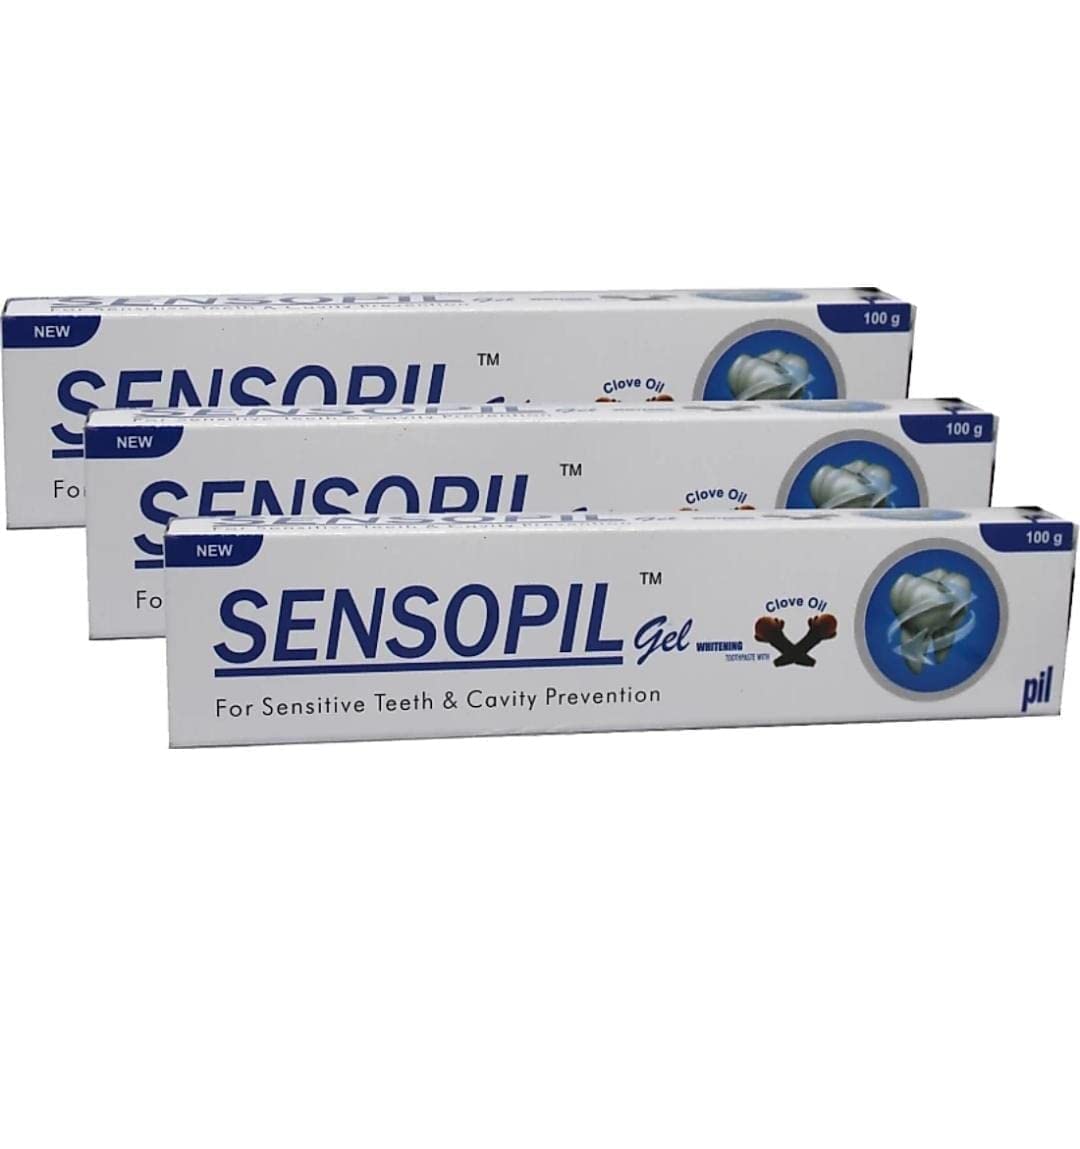 Sensopil Gel toothpaste Clove oil for sensitive teeth & cavity prevention (100gm each) - Pack of 2